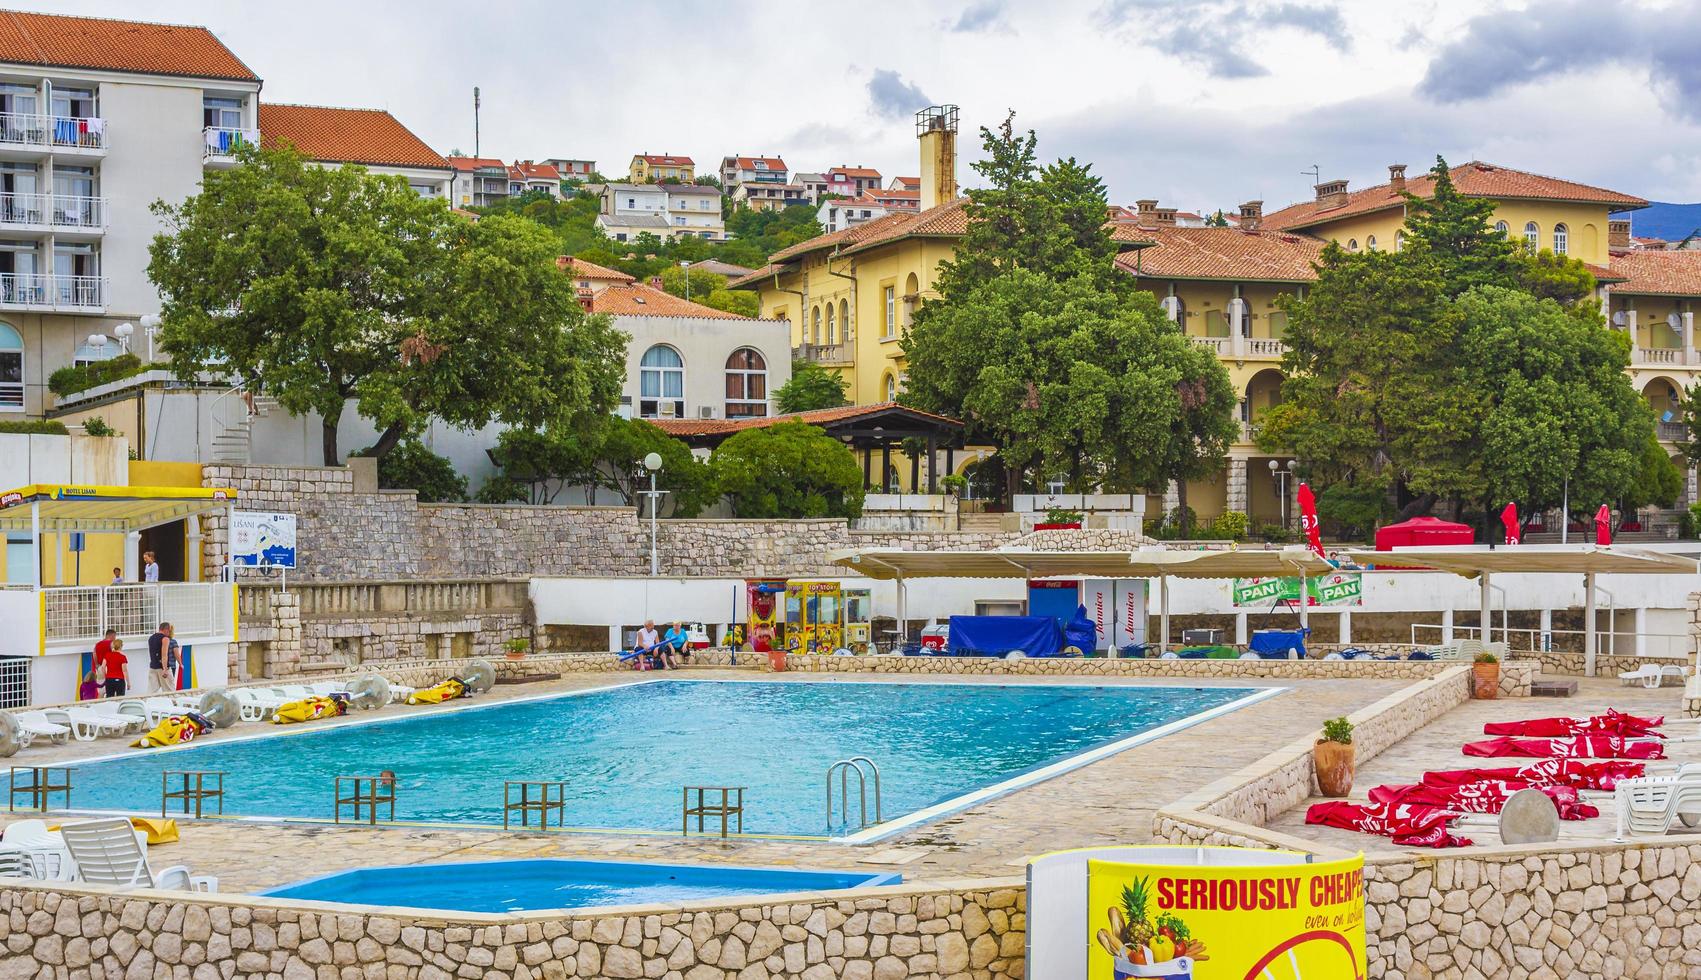 Pool at the beach and promenade in Novi Vinodolski, Croatia photo